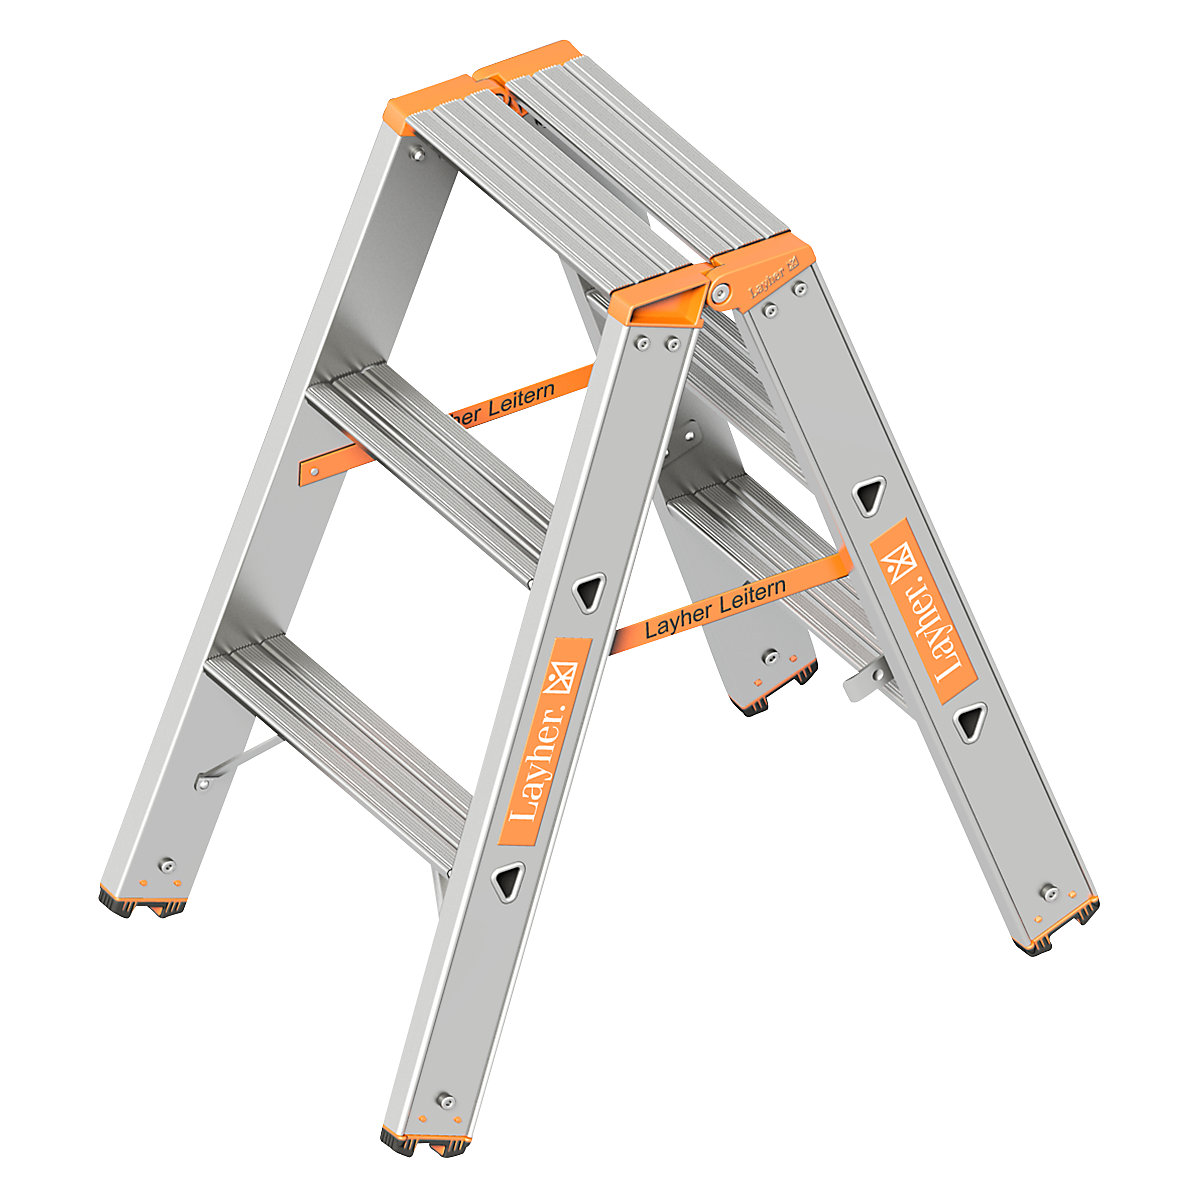 Step ladder - Layher